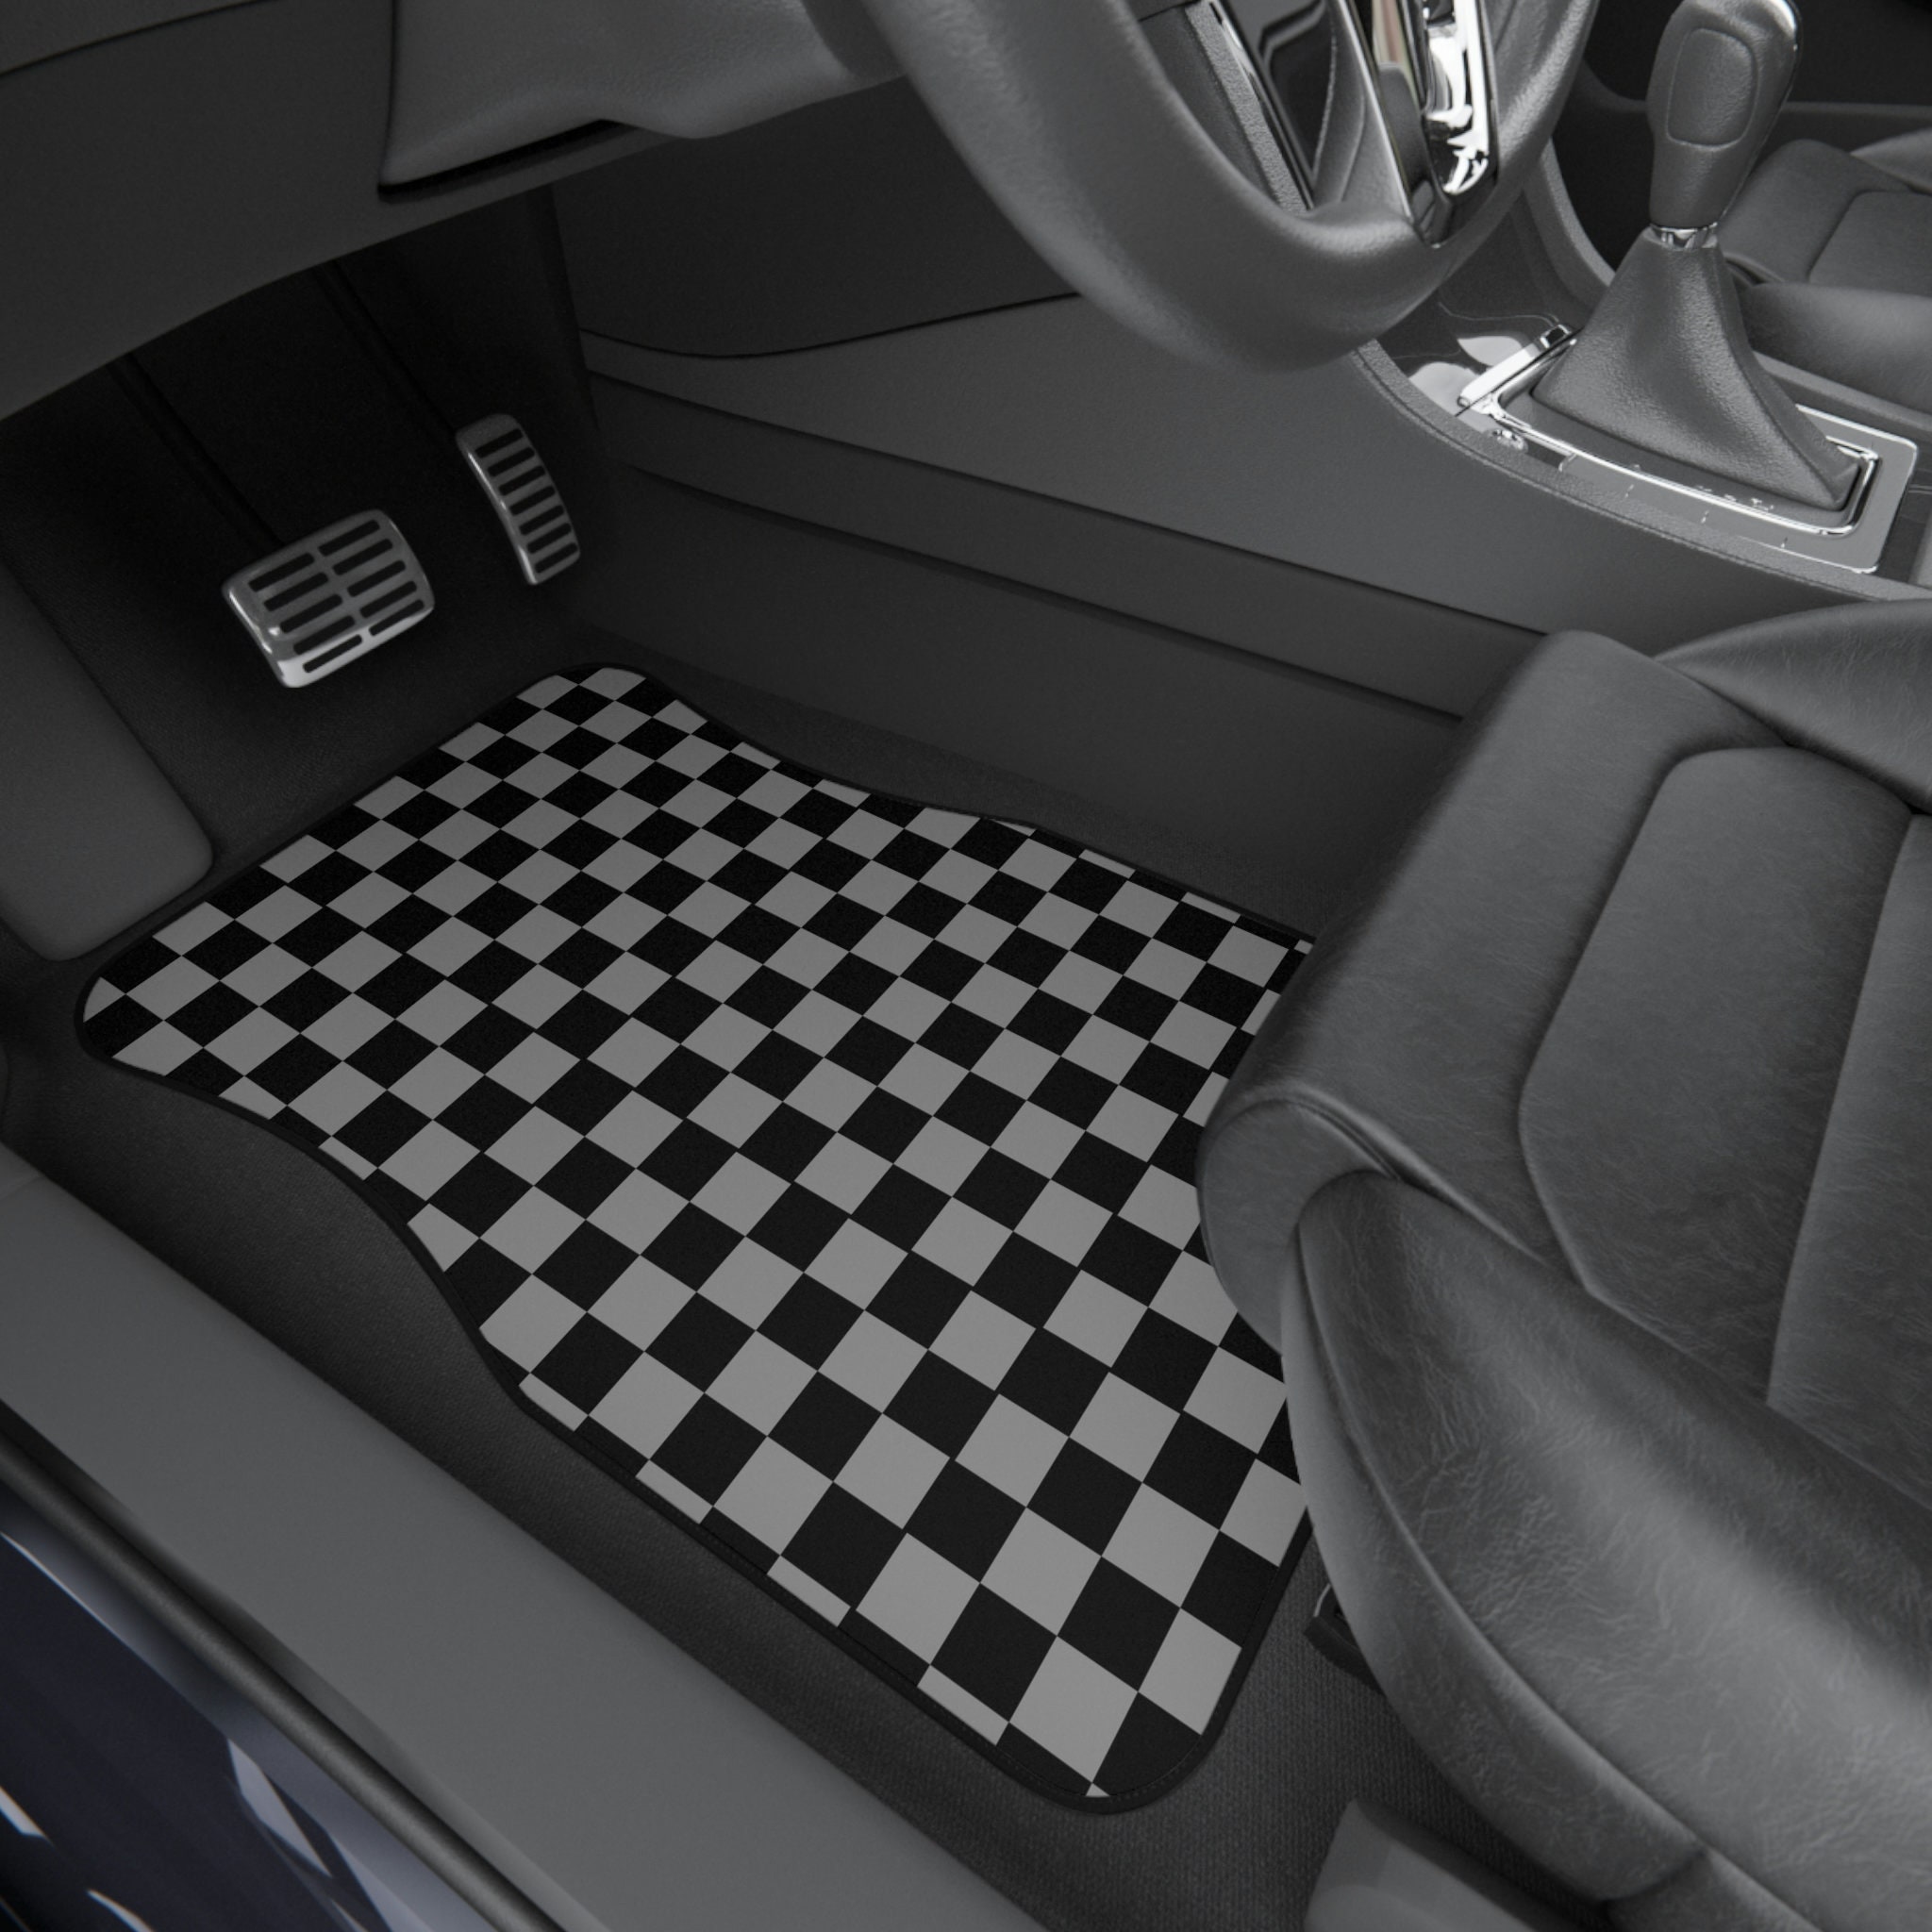 Checkered Car Mats Set of 4, Heart Car Accessories, Cute Car Floor Mat,  Girly Car Accessories, Car Mats for Women, Girly Car Decor Cute 